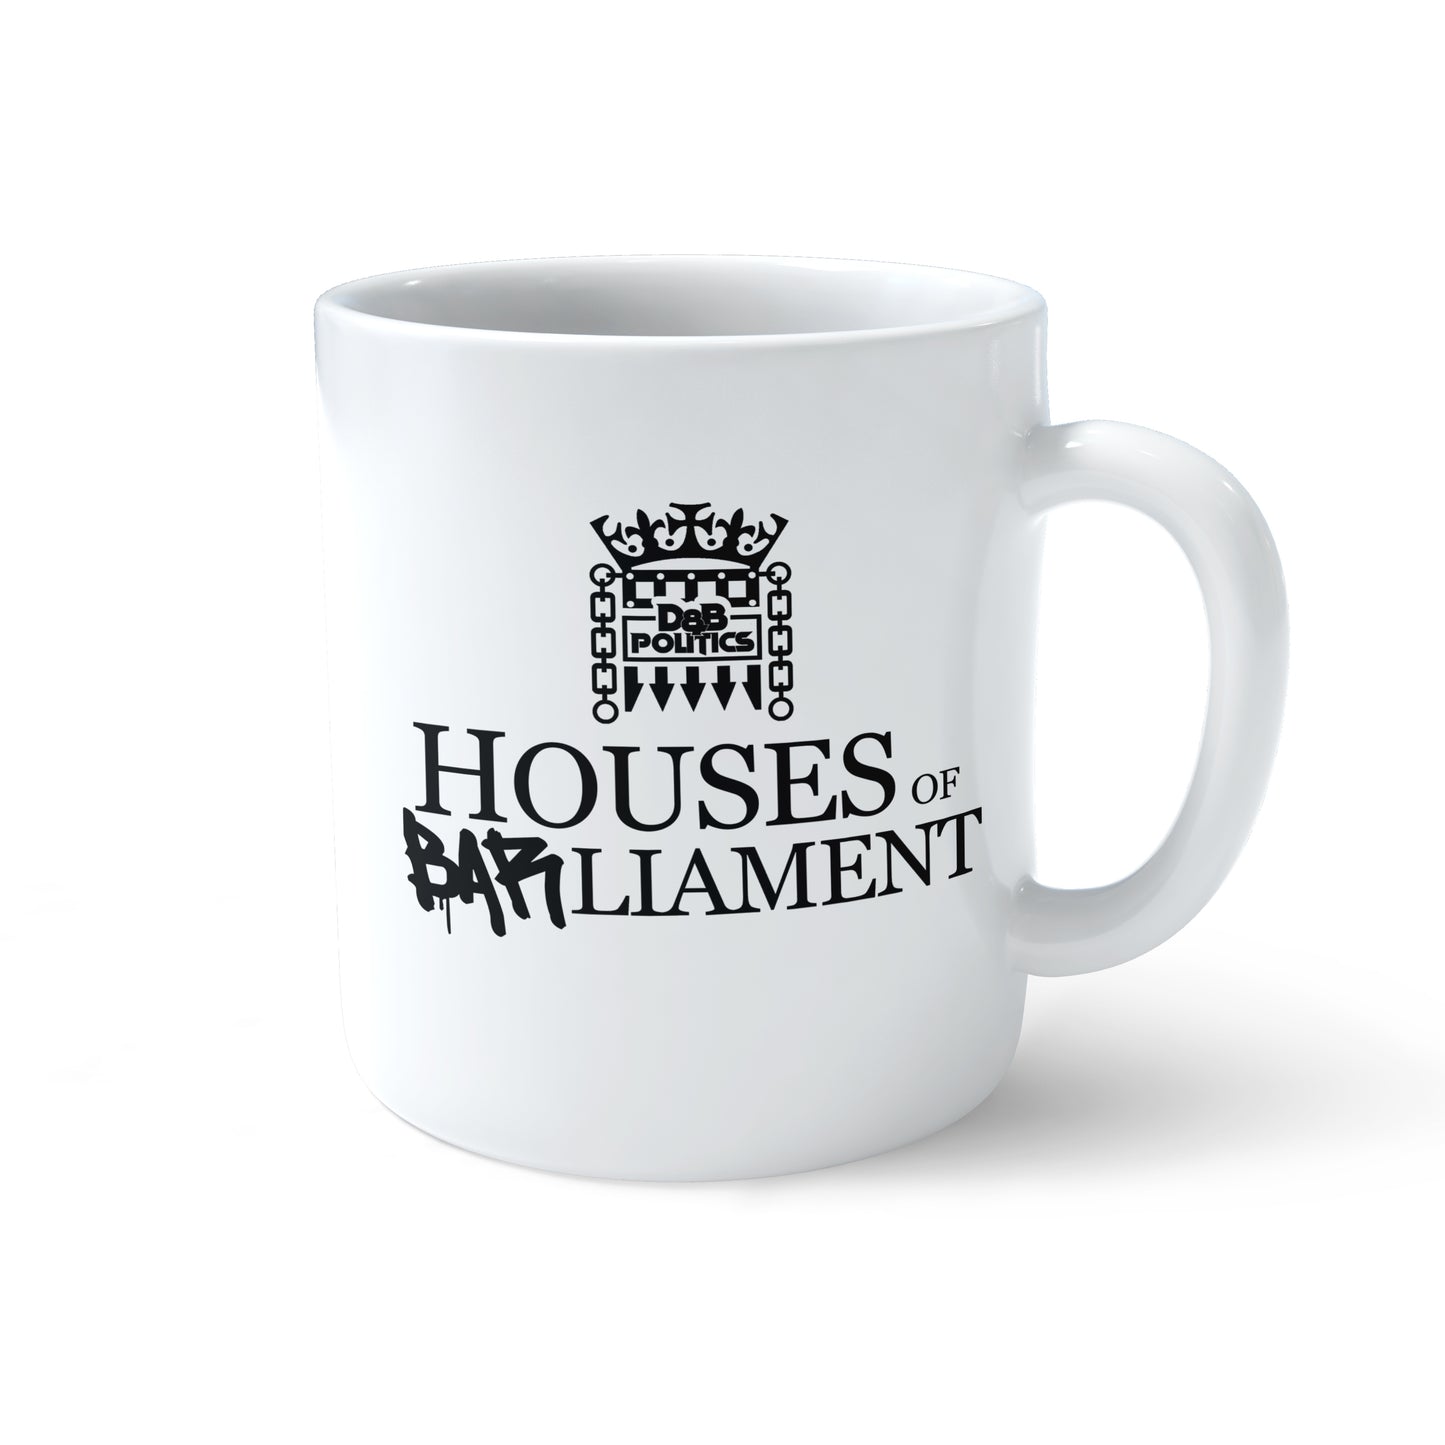 Houses Of Barliament Mug